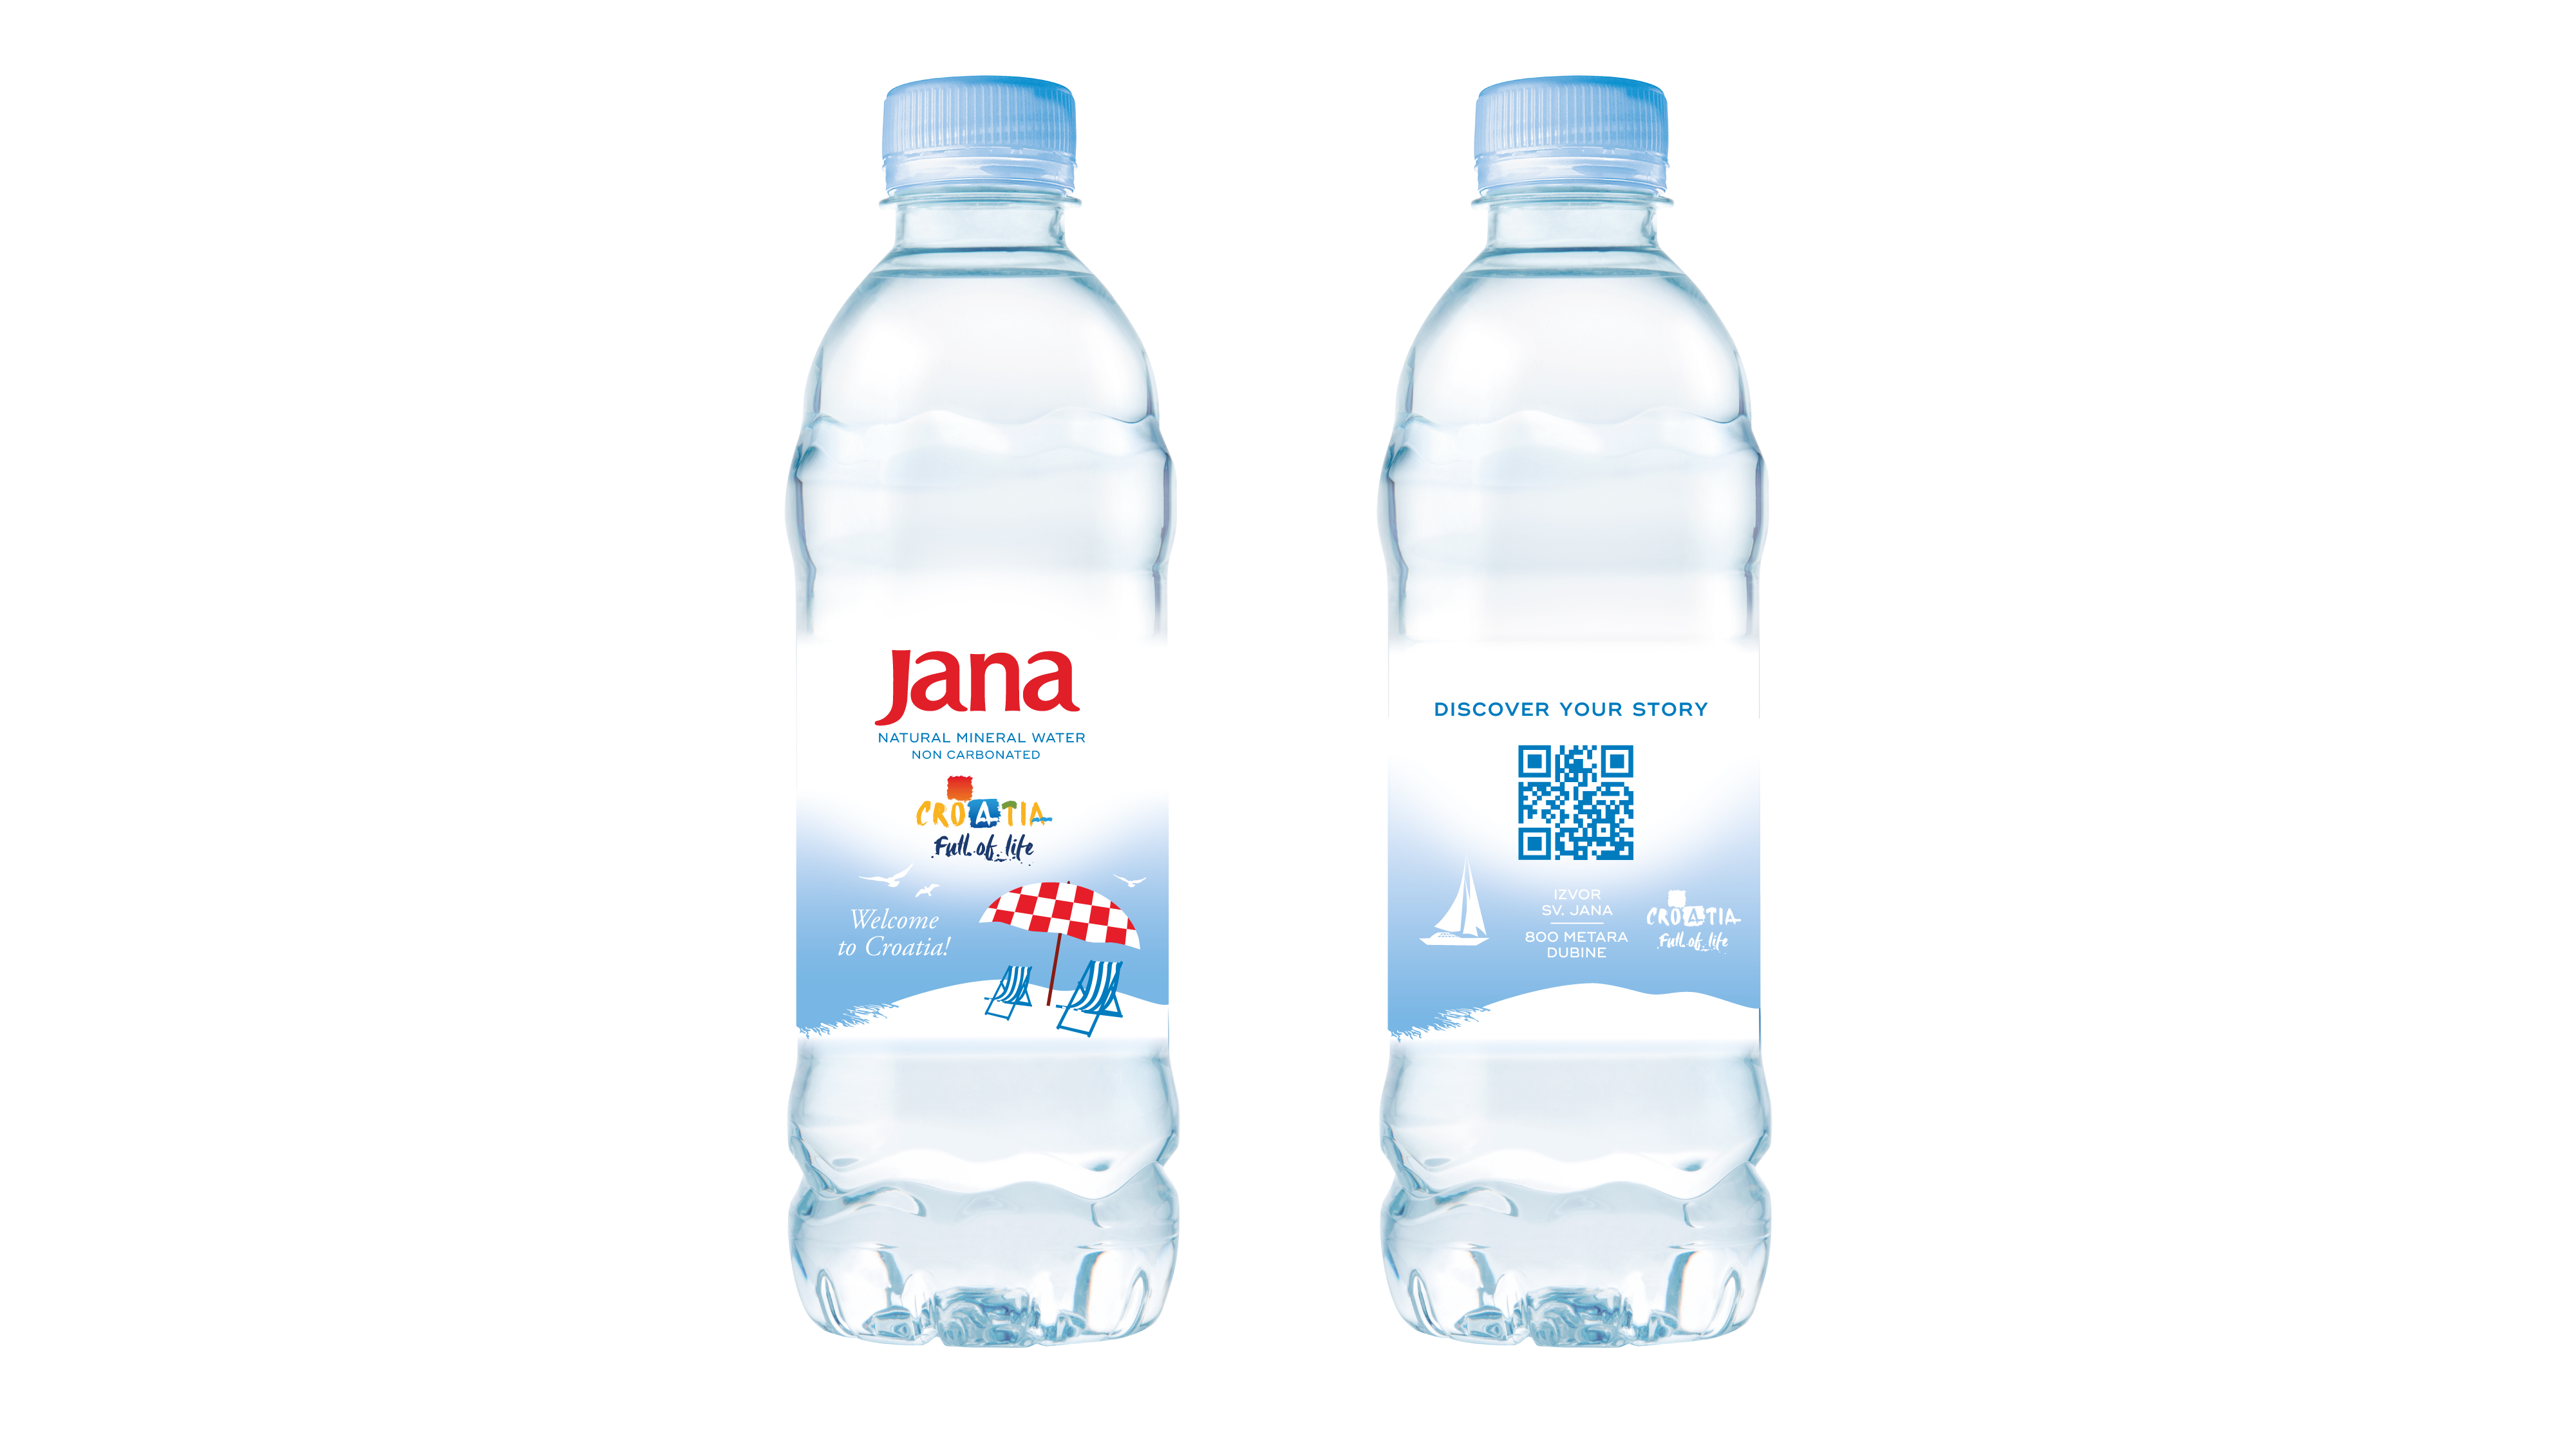 Jana htz welcome drink